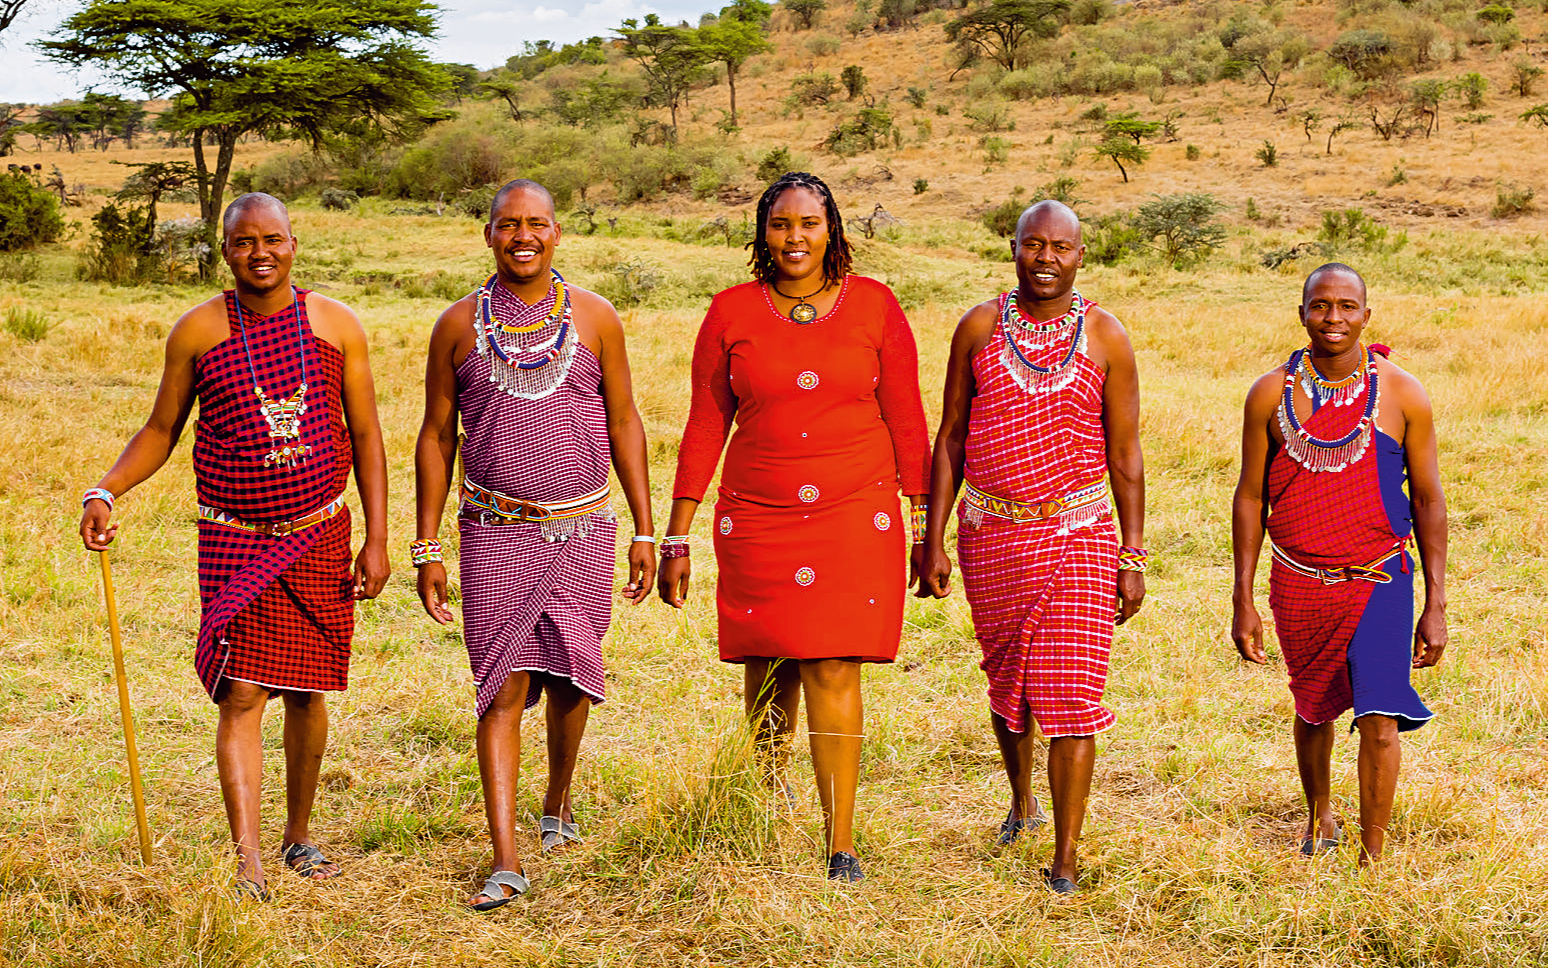 Virgin Limited Edition team members at Mhali Mzuri walking across a field